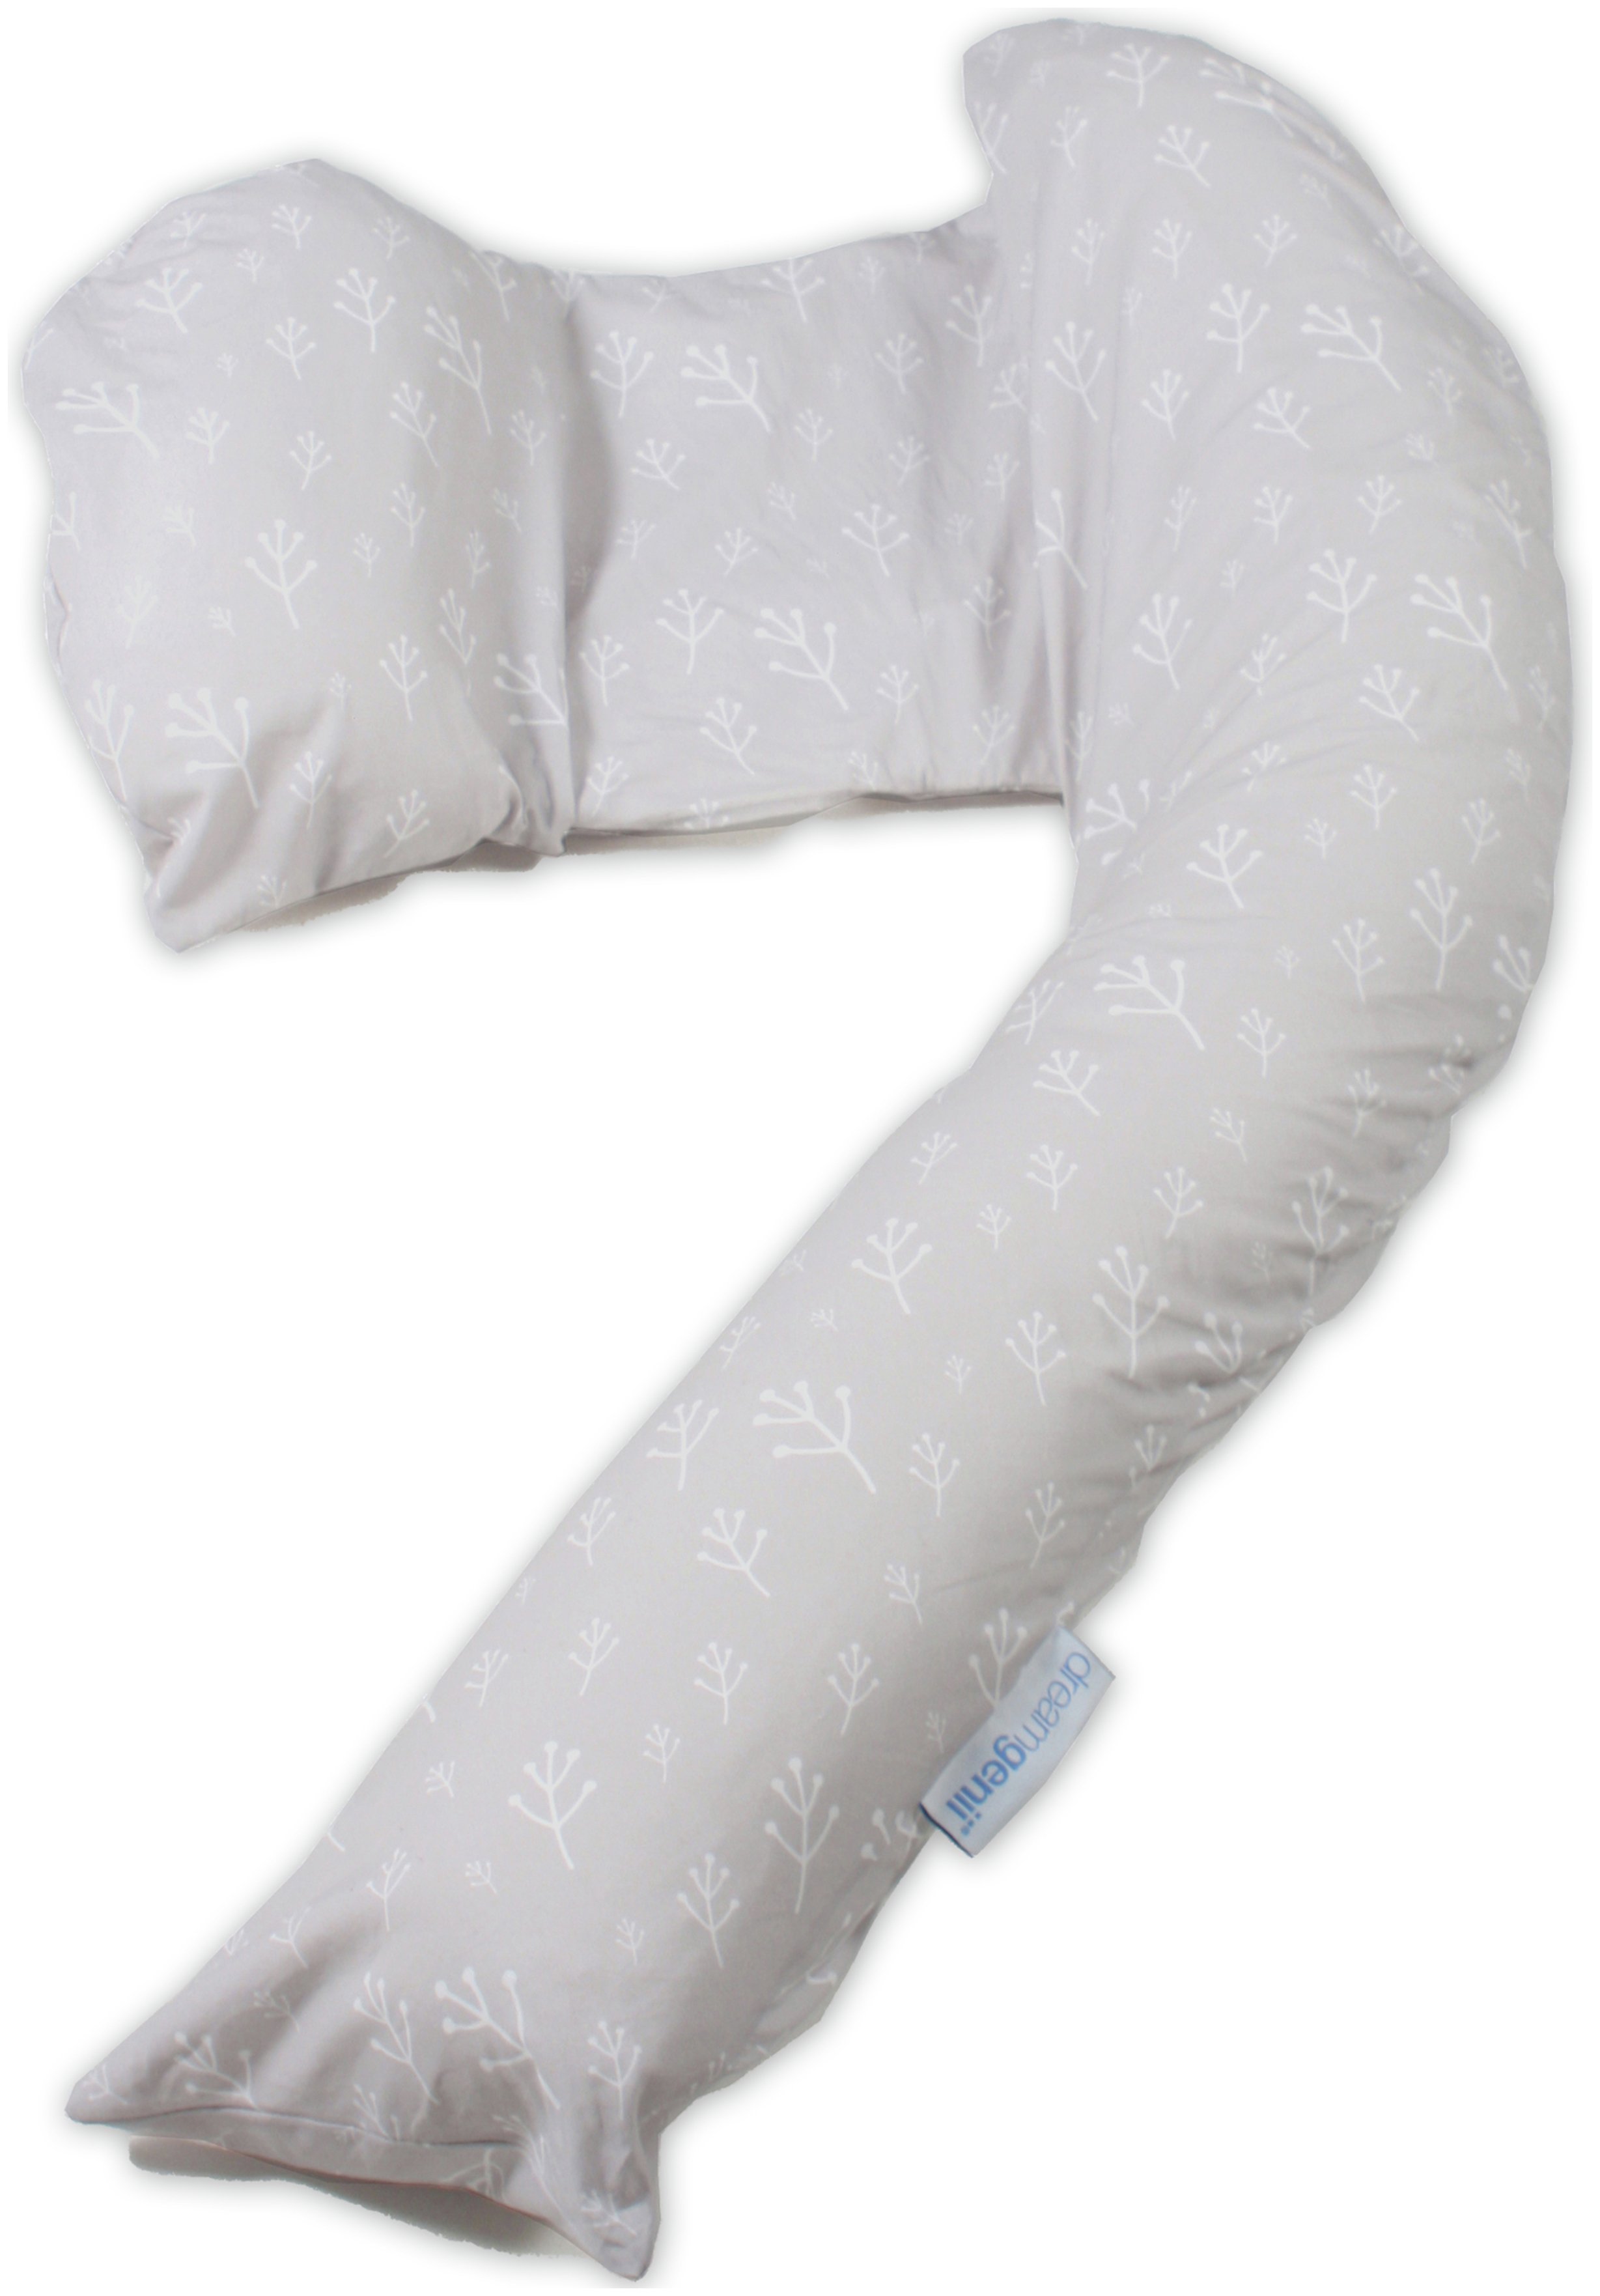 Dreamgenii Pregnancy Pillow Floral Grey